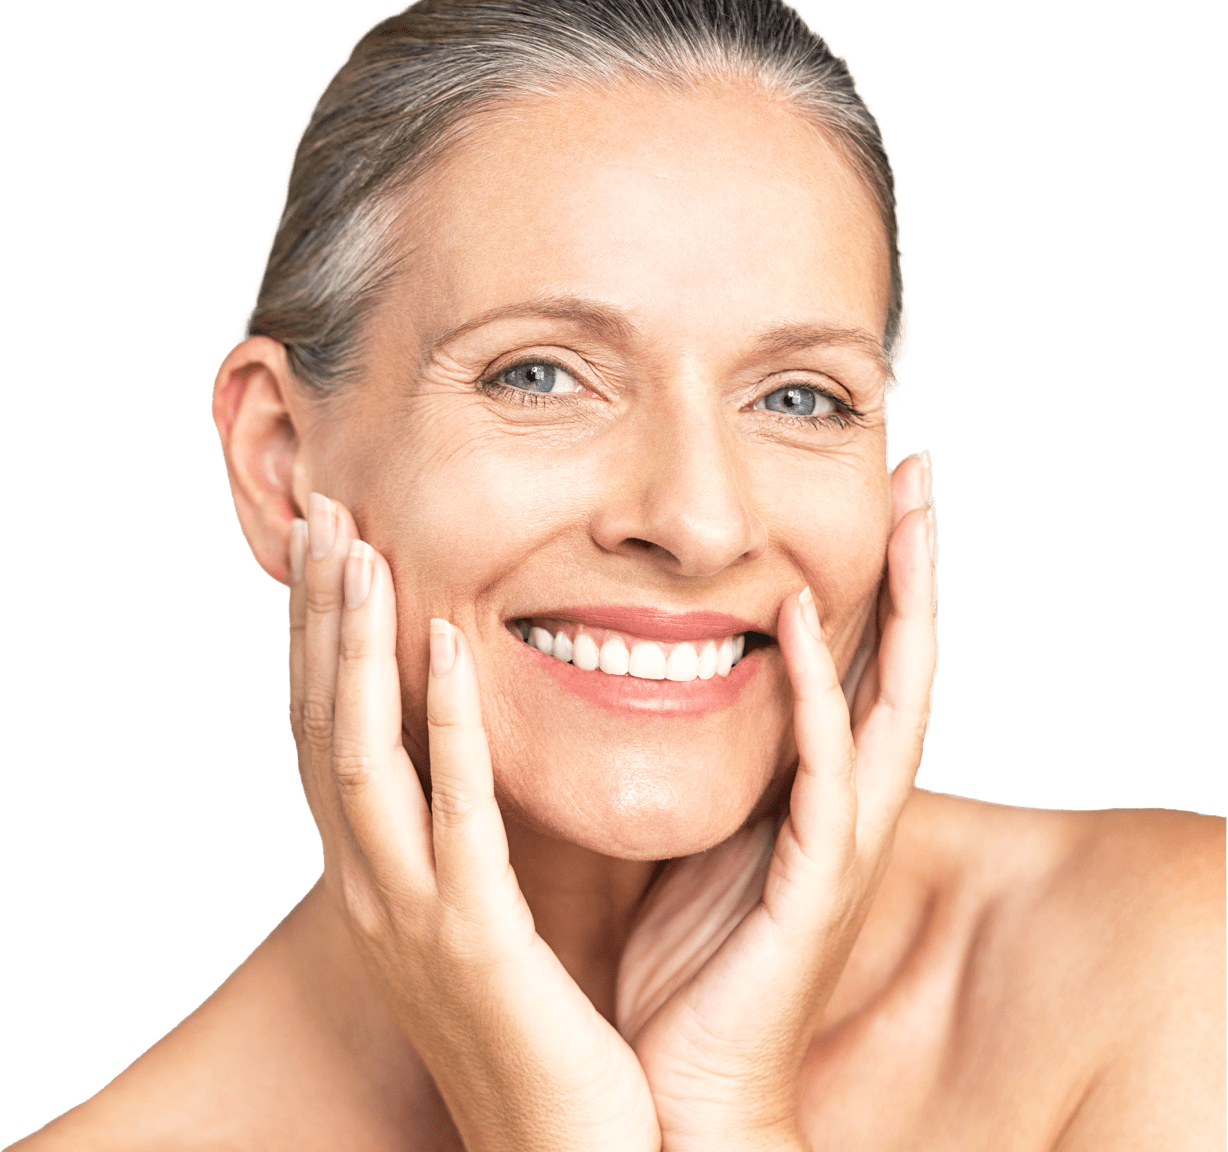 skin tightening treatment